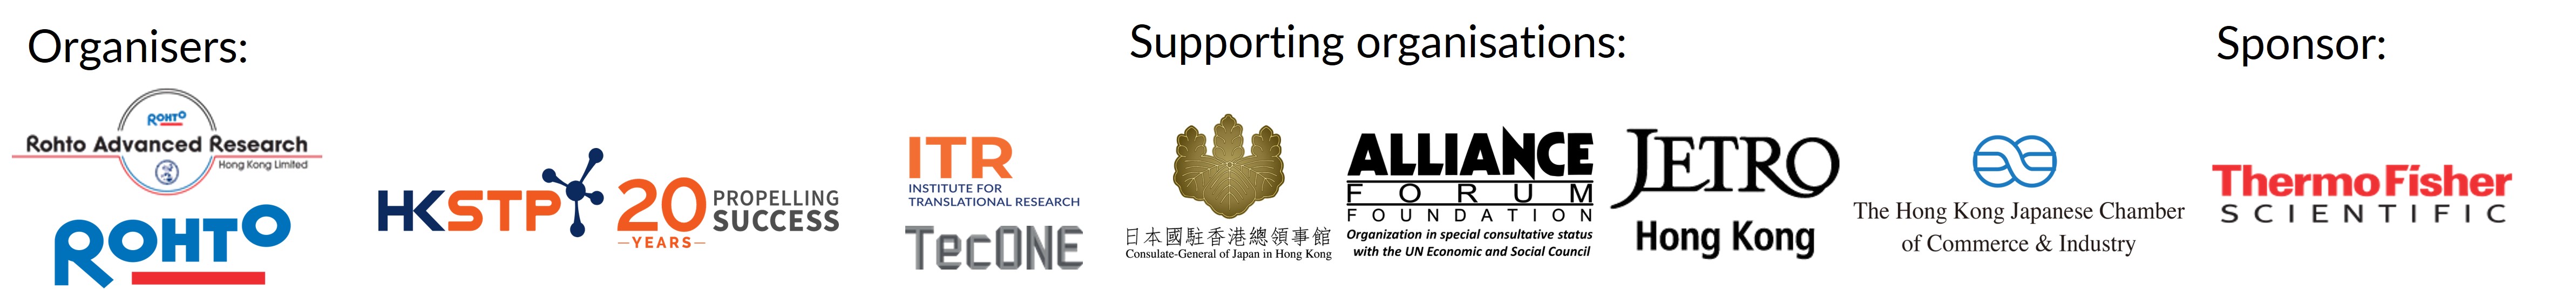 sponsors organisers supporting organisers co-organisers